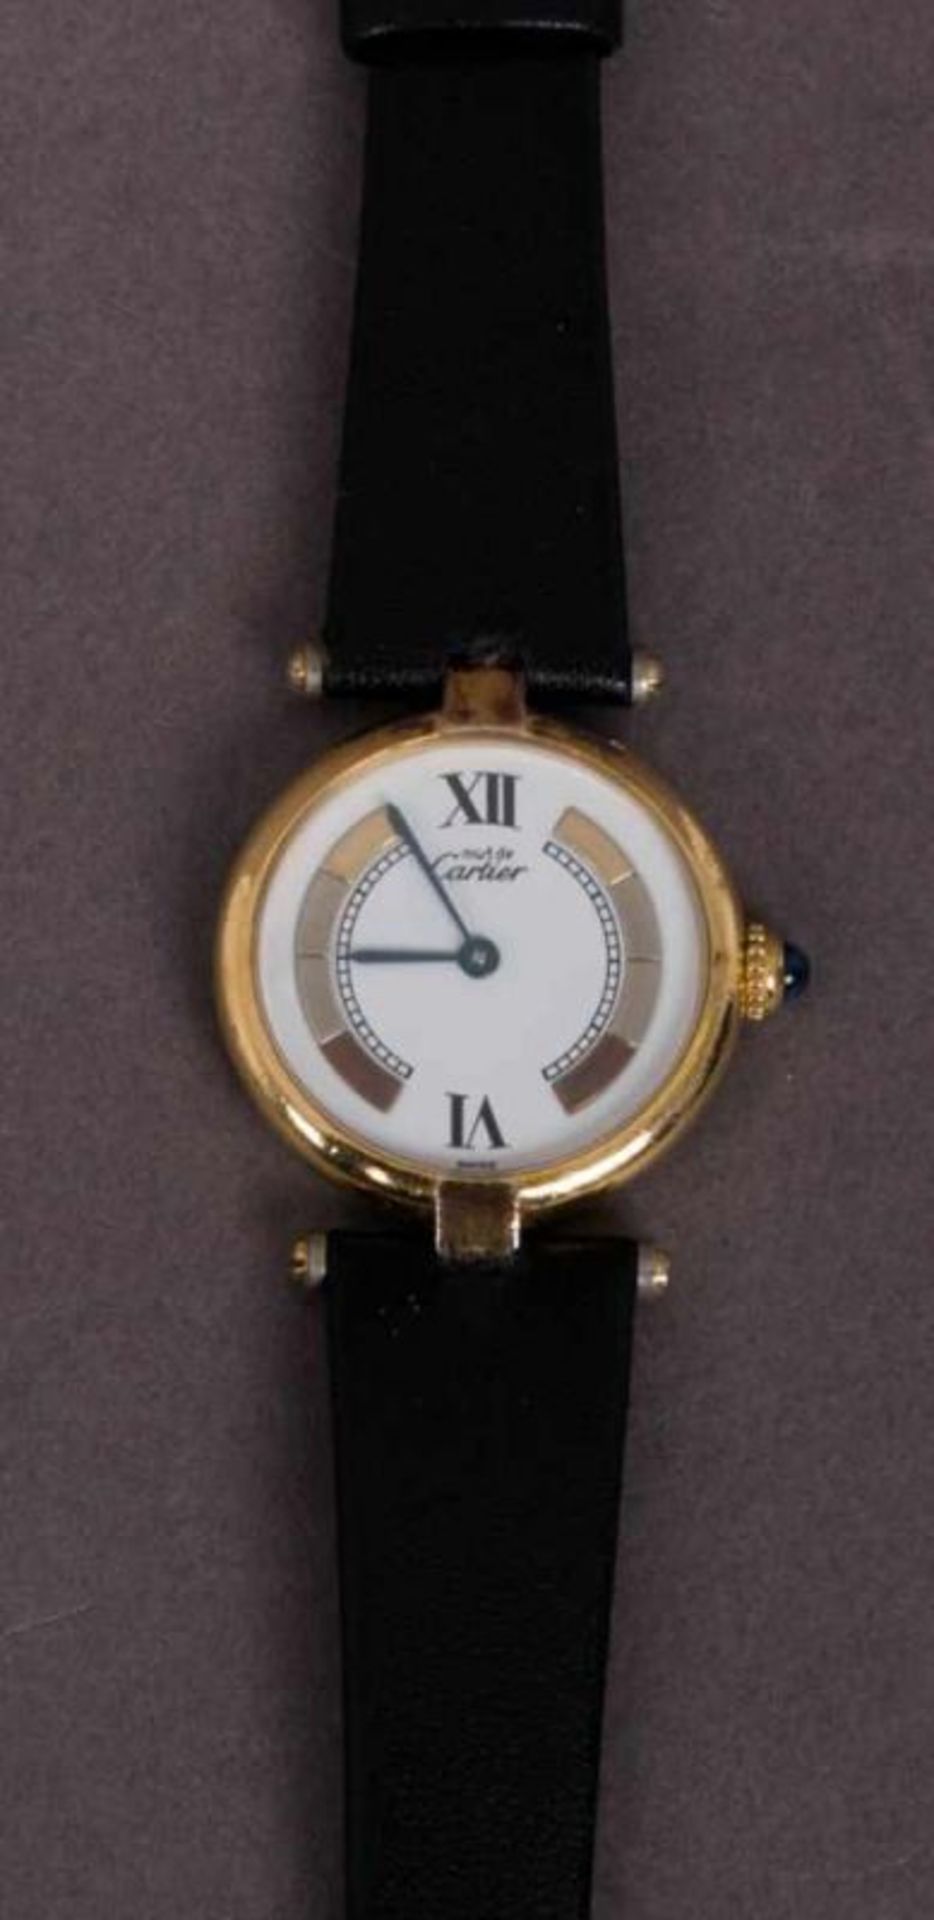 "CARTIER"-Damenarmbanduhr, Silber vergoldet, Quarzwerk, Ref. 590003, ca. 1980er/90er Jahre.